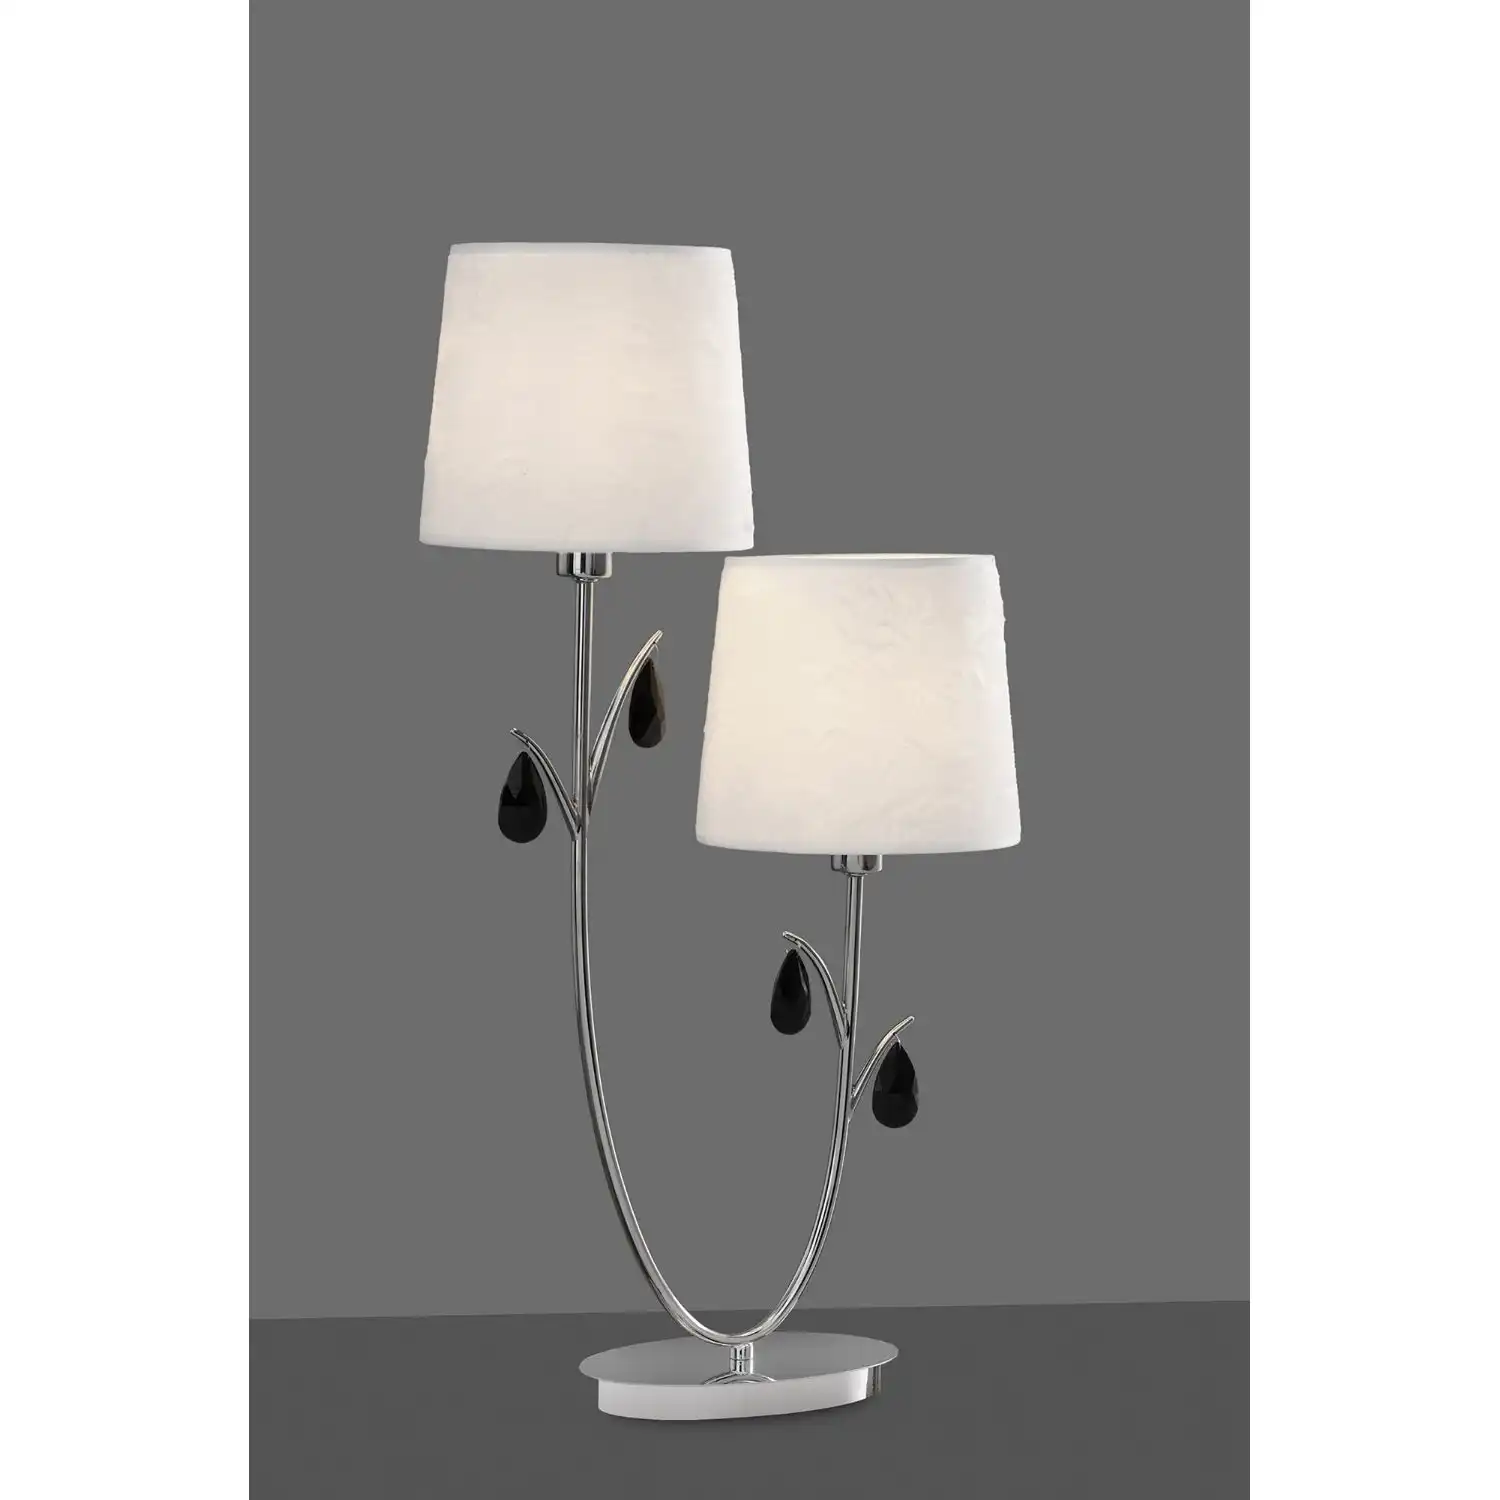 Andrea Table Lamp 63cm, 2 x E14 (Max 20W), Polished Chrome, White Shades, Black Crystal Droplets